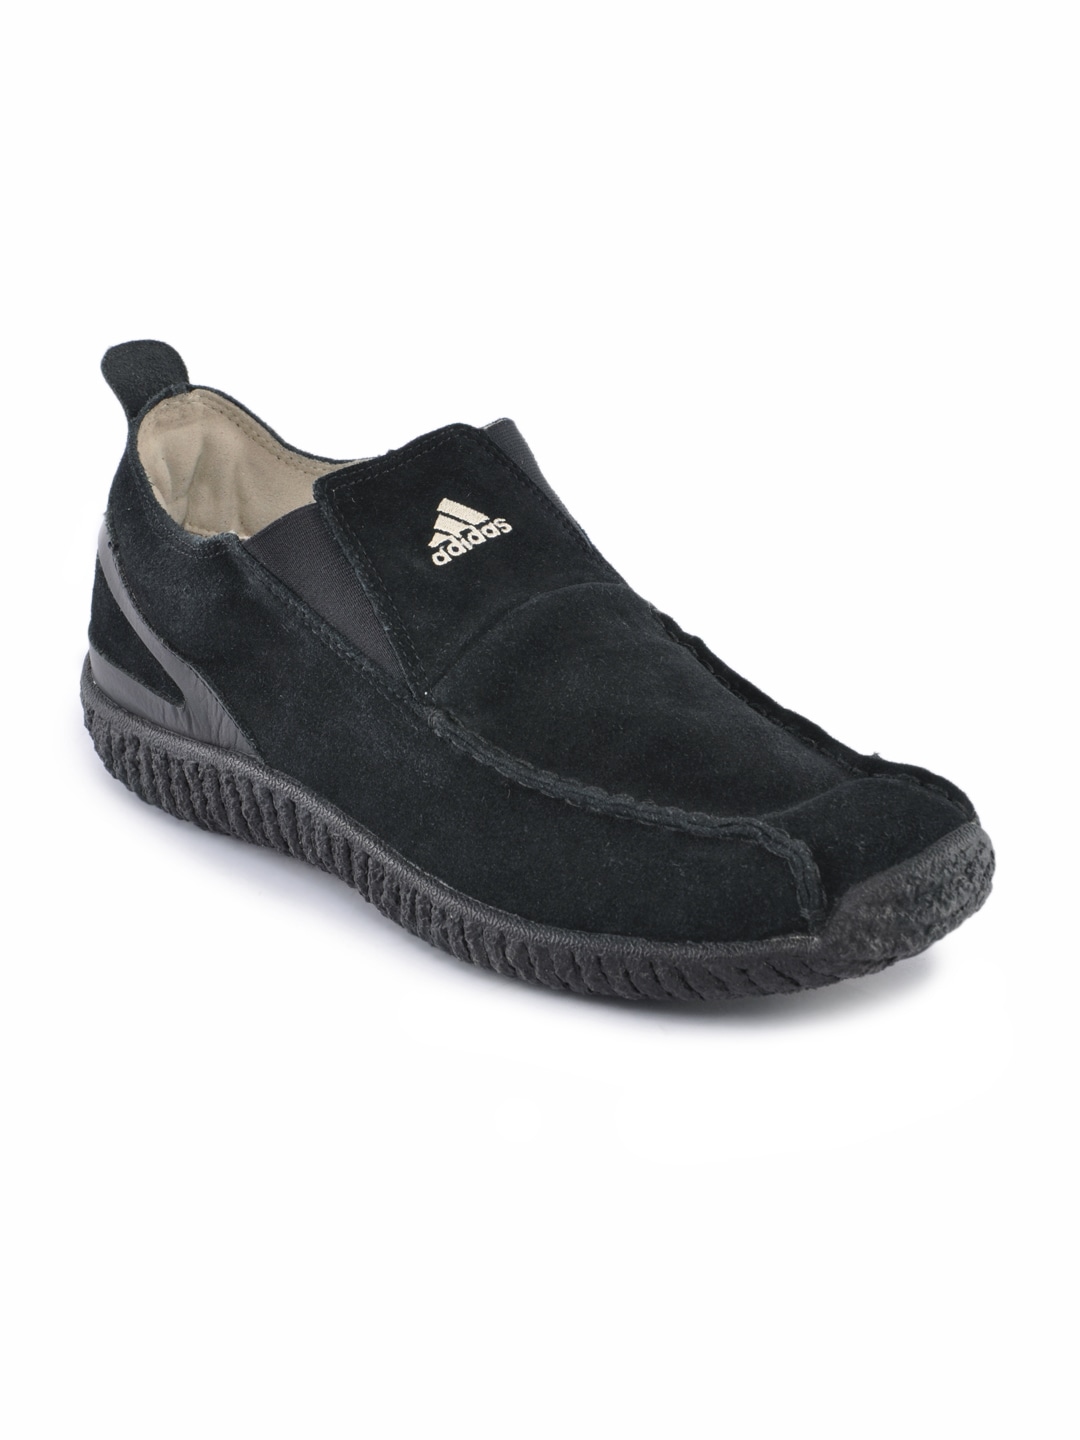 ADIDAS Men Black Anzo Breeze Casual Shoes